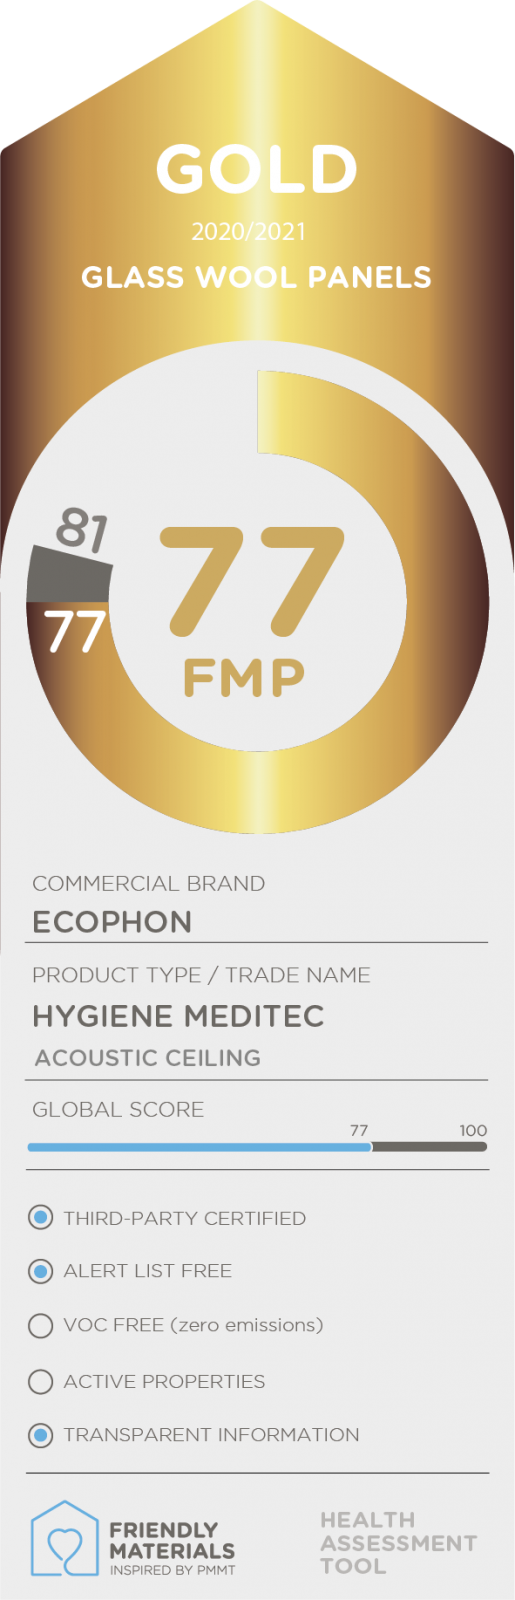 ECOPHON HYGIENE MEDITEC A gold 77